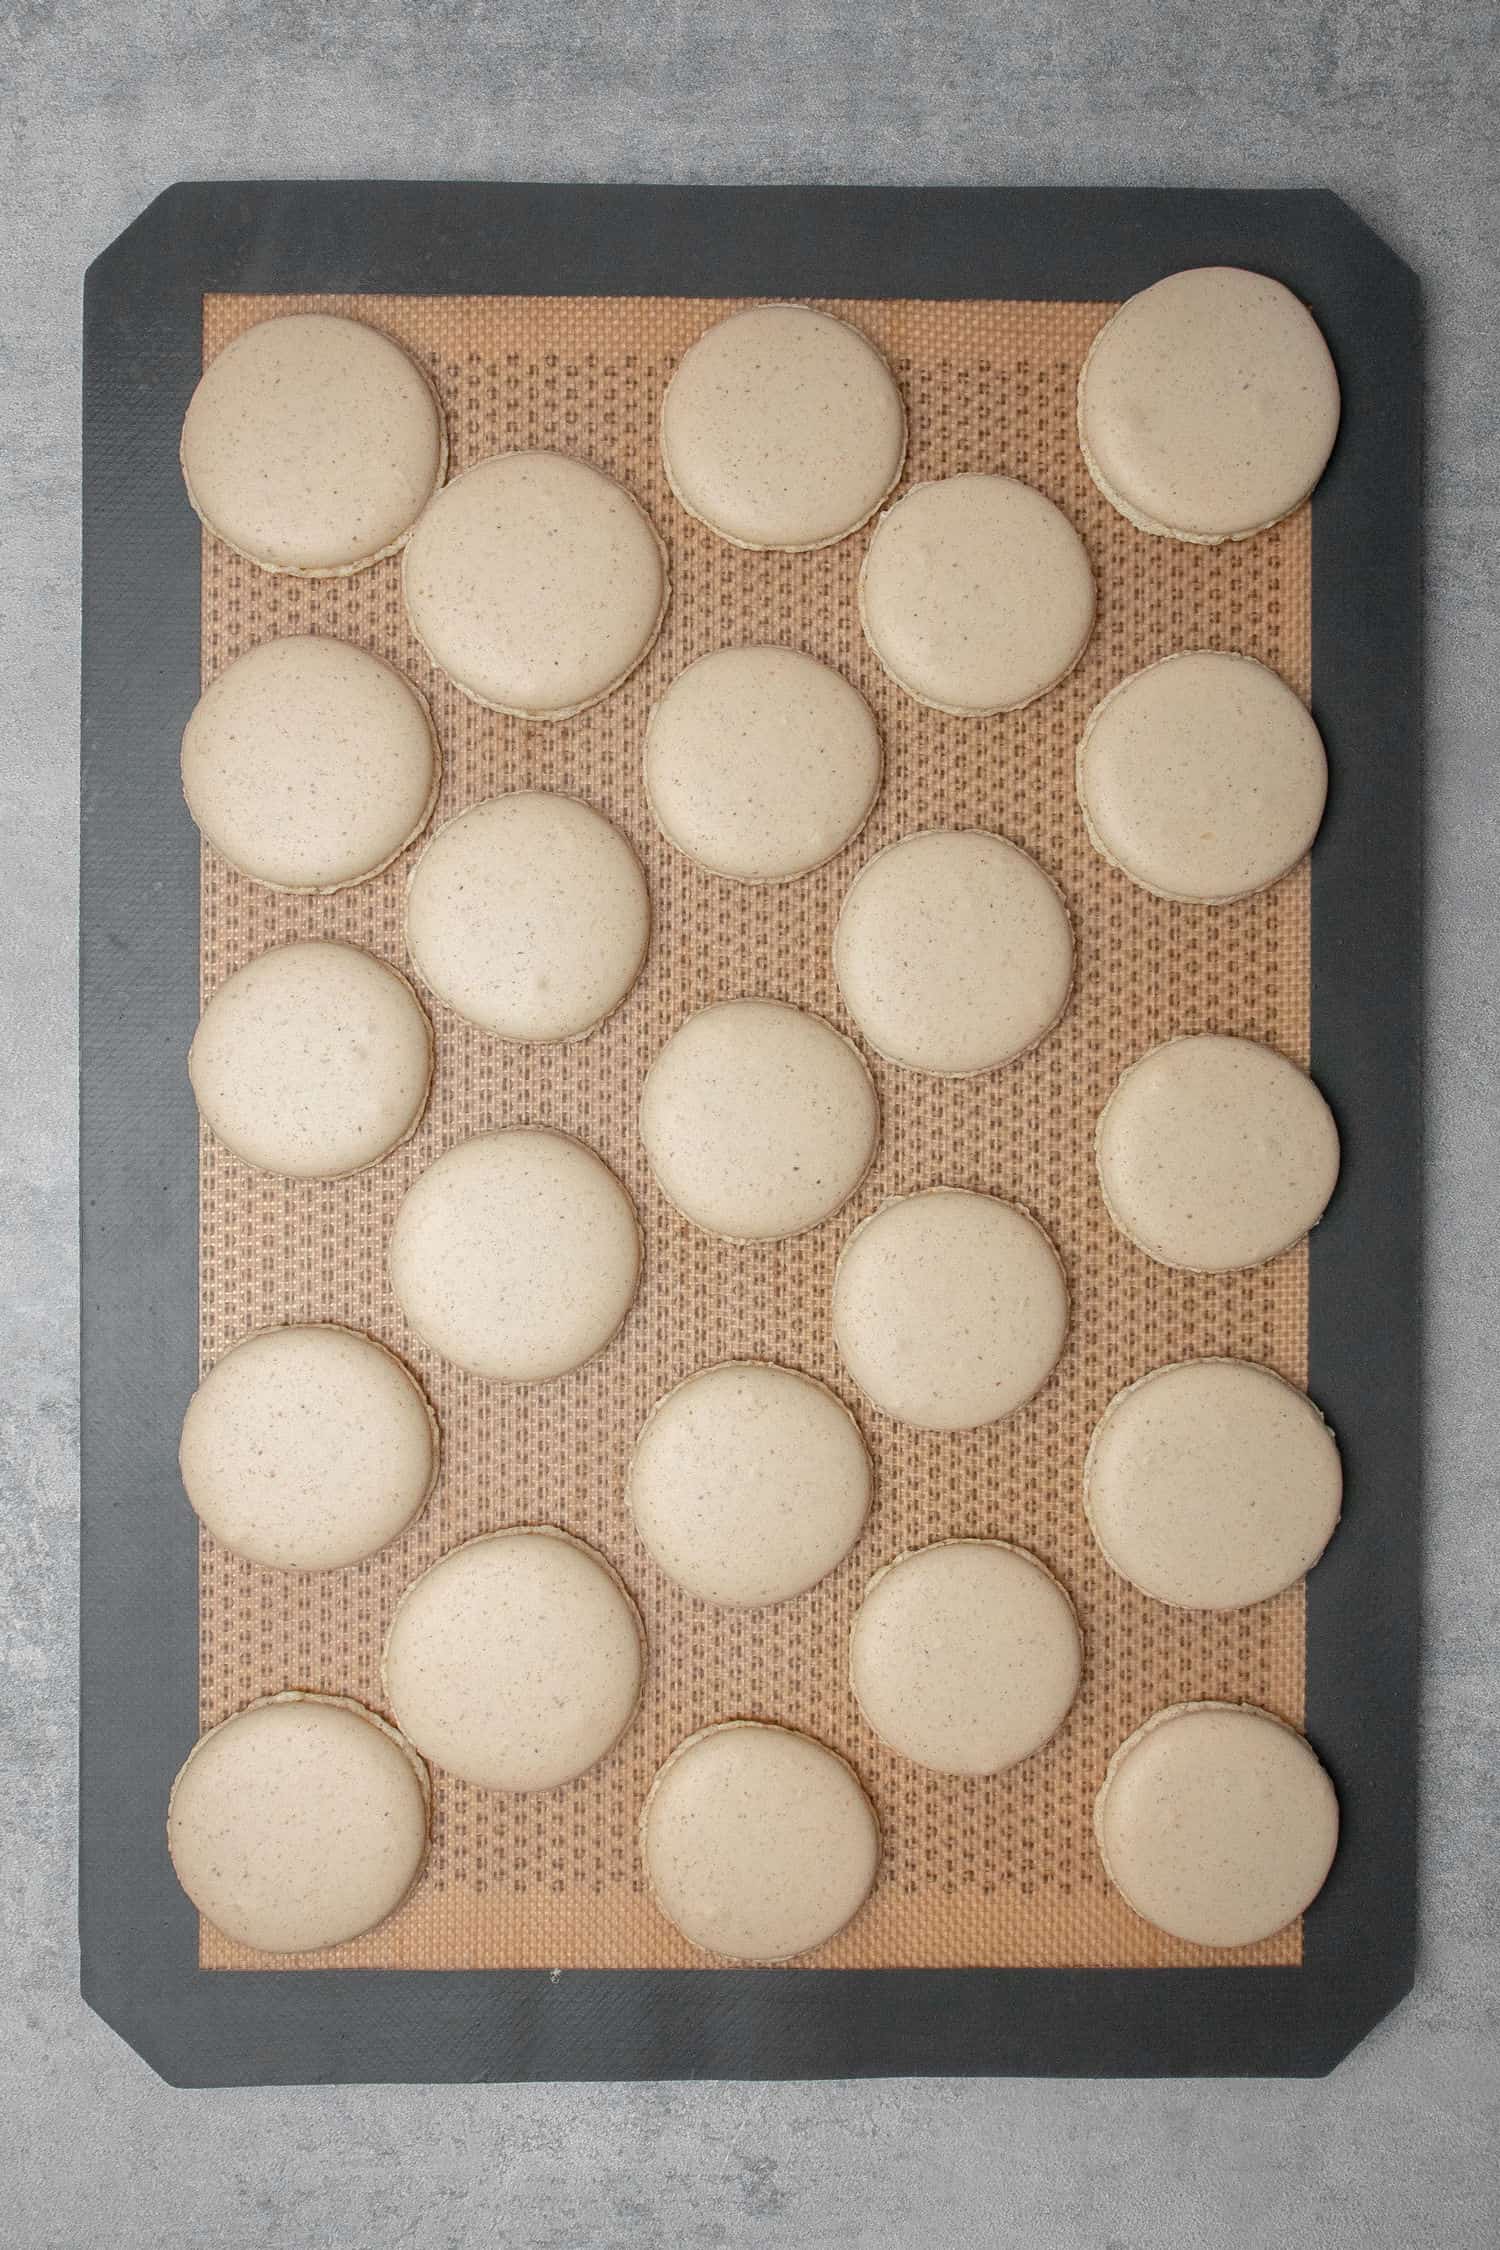 Chocolate hazelnut macaron shells on a baking mat.